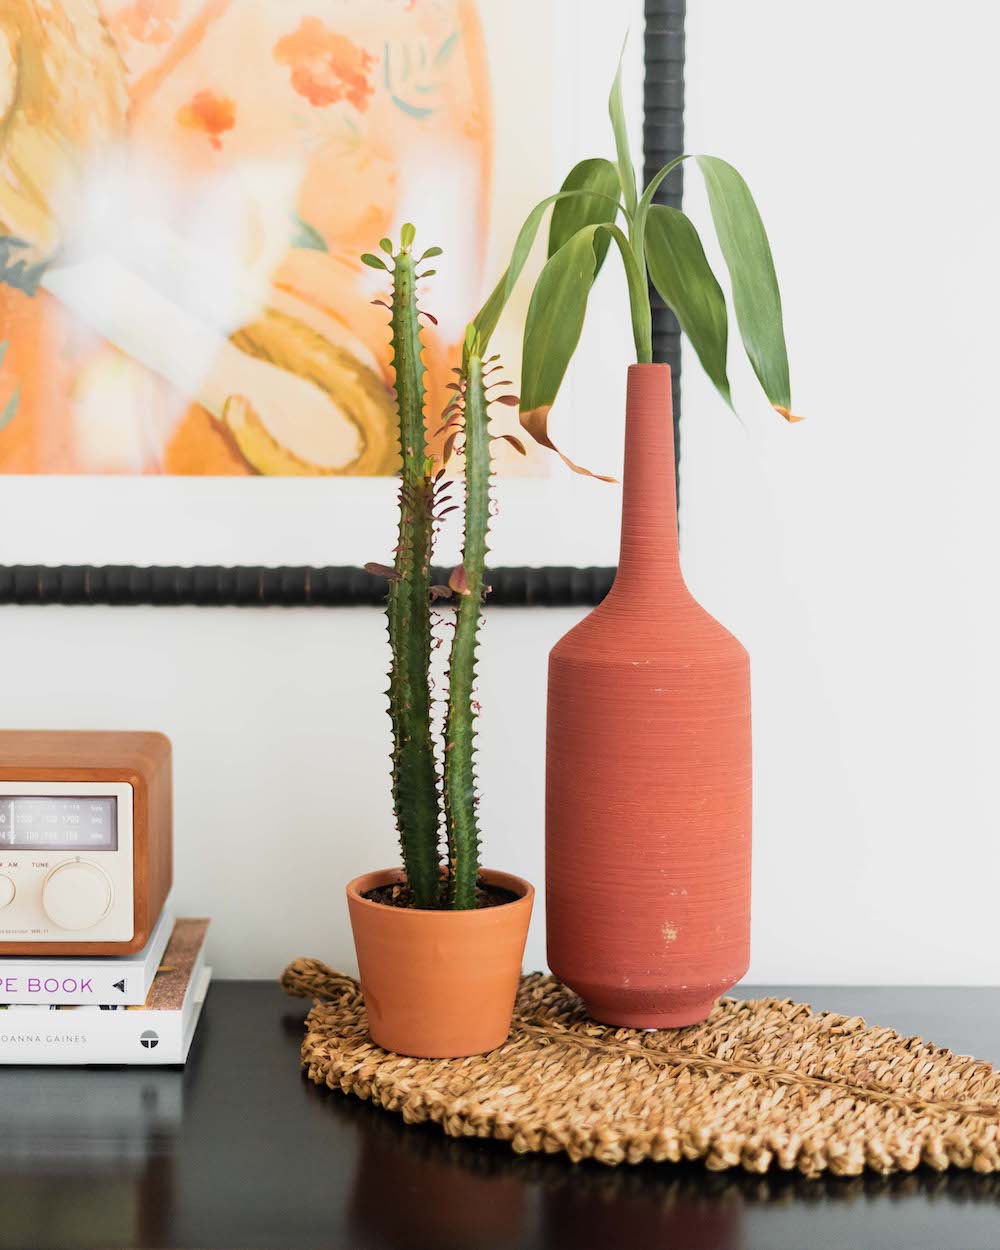 Two organic vases holding plants